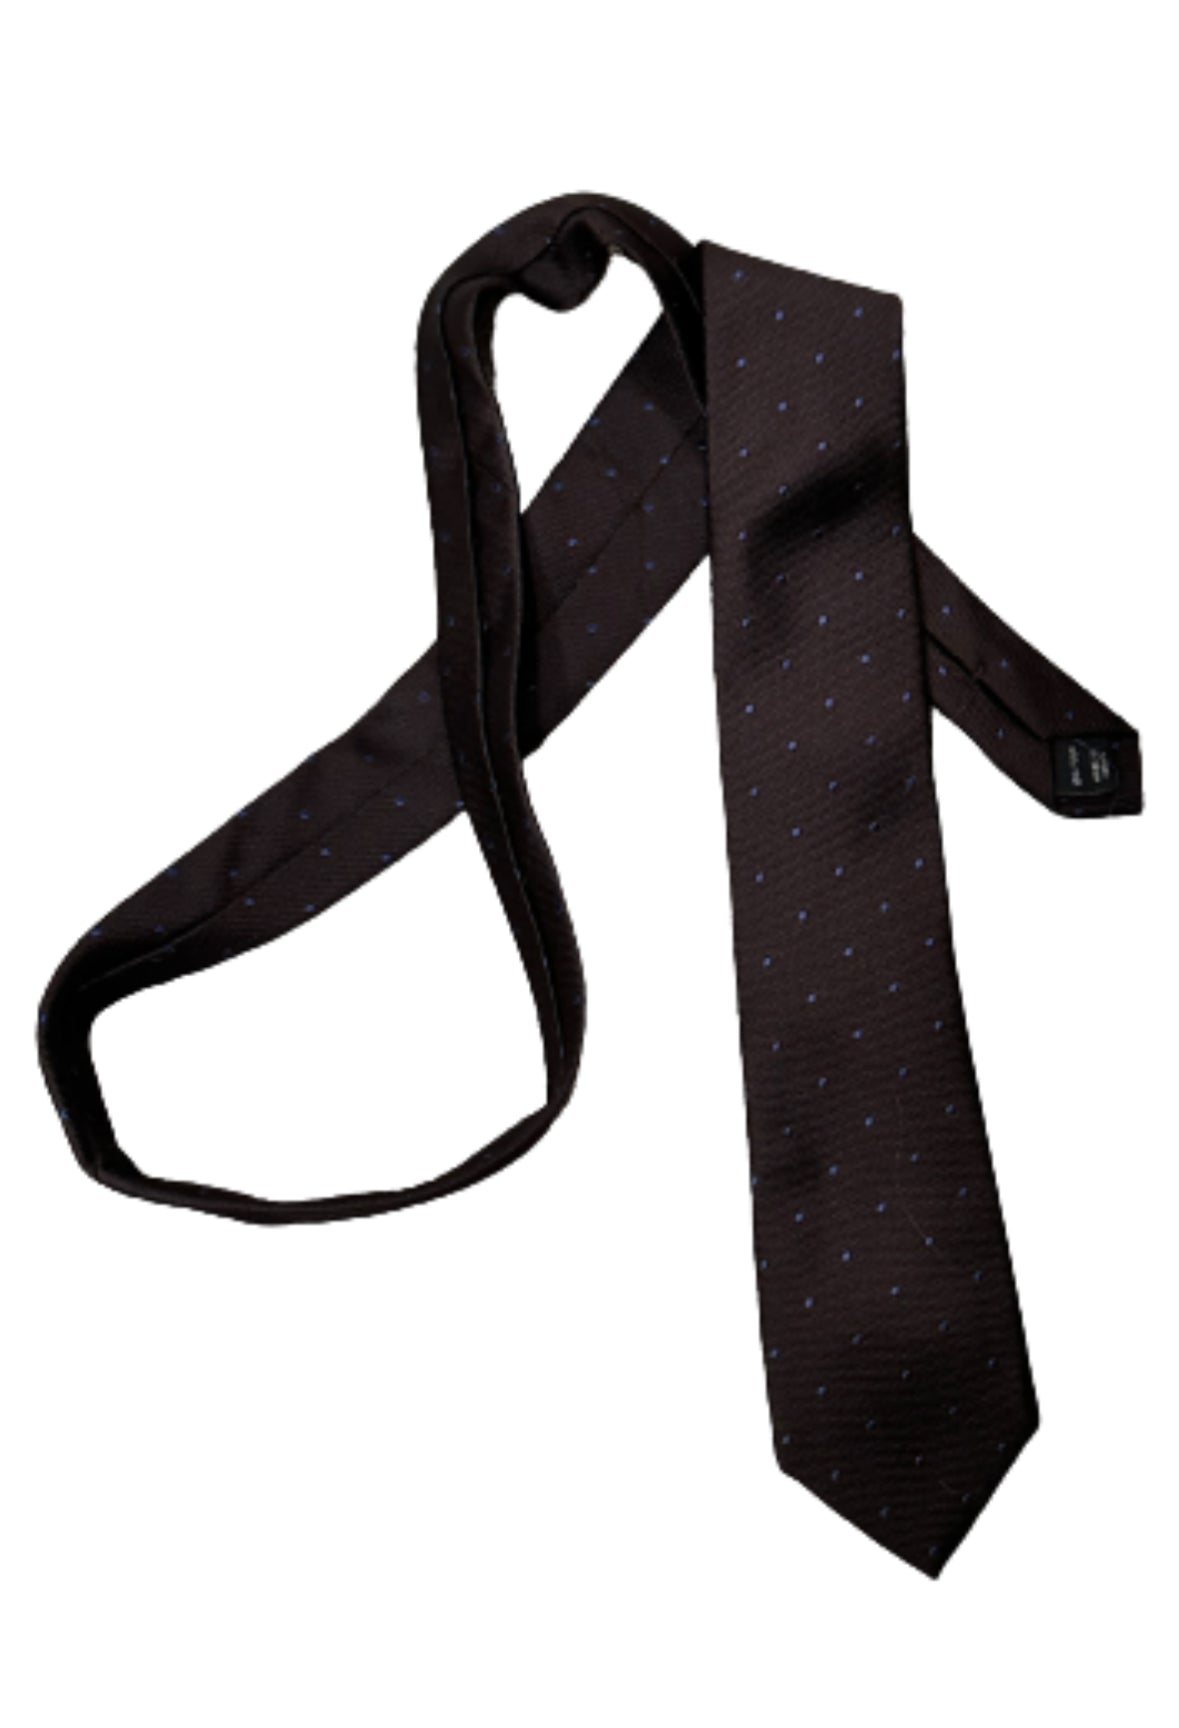 THE OFFICE: Creed Braton's Neckties